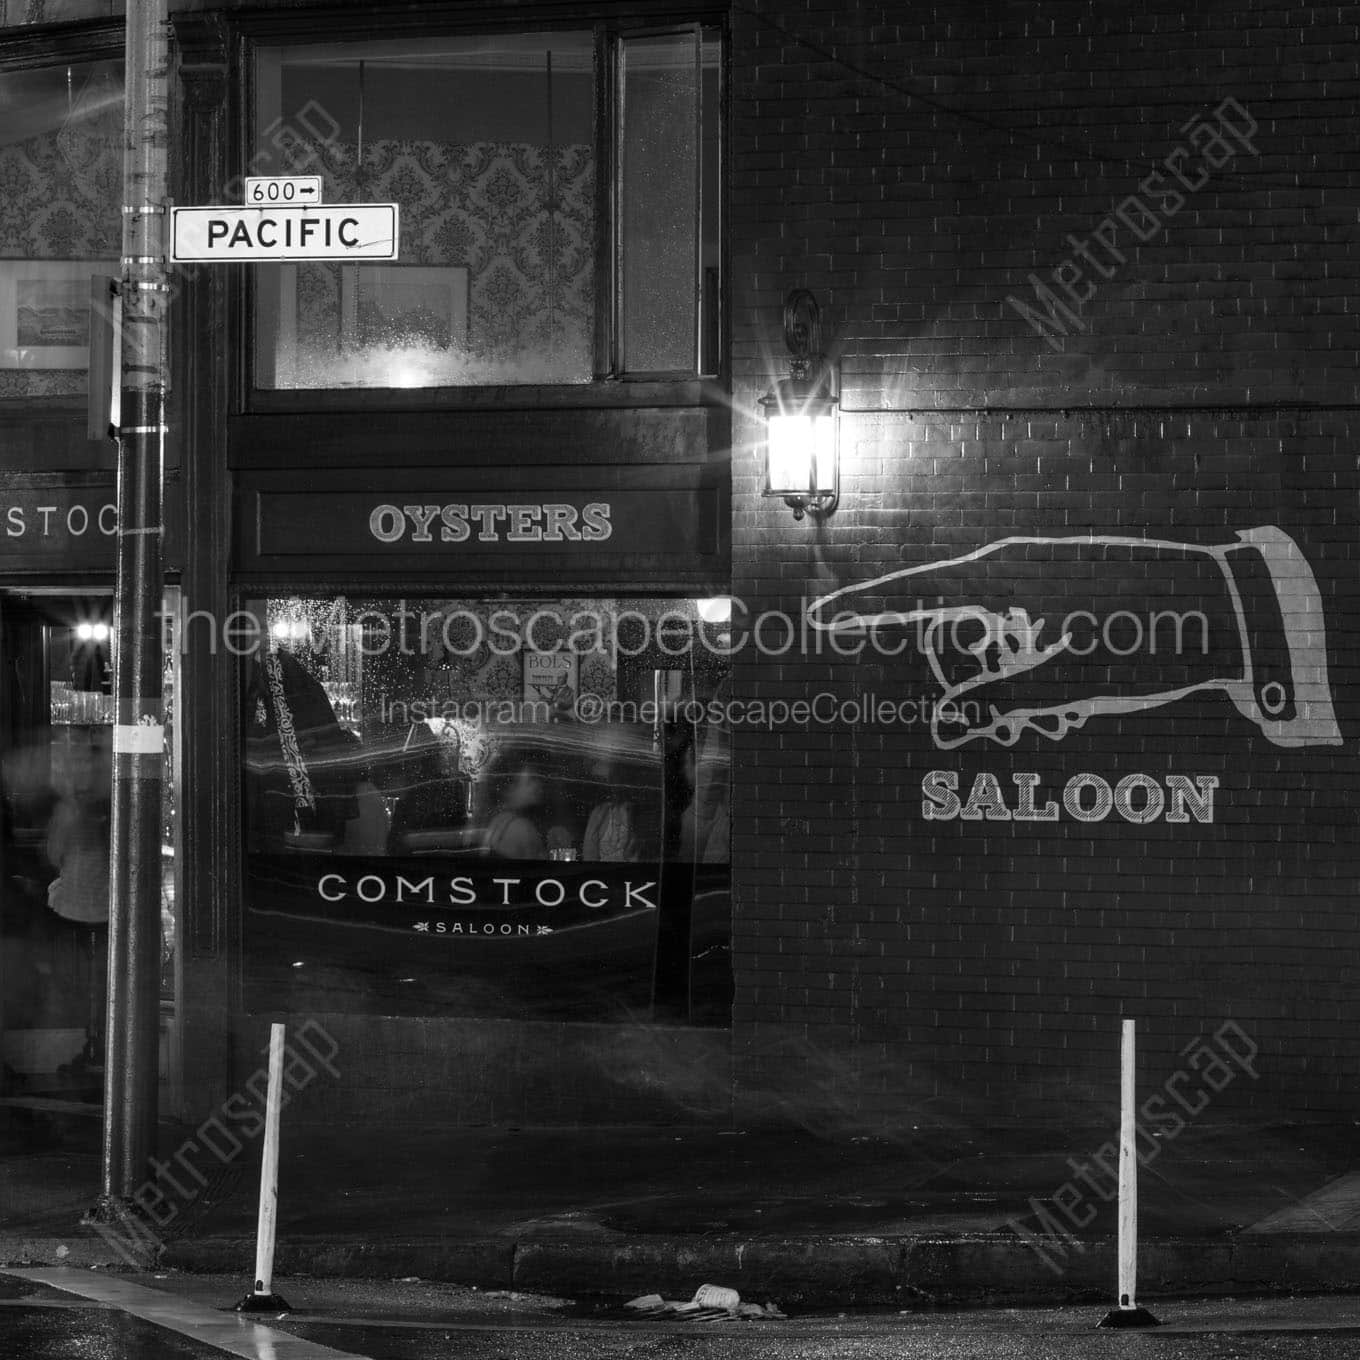 comstock saloon Black & White Office Art